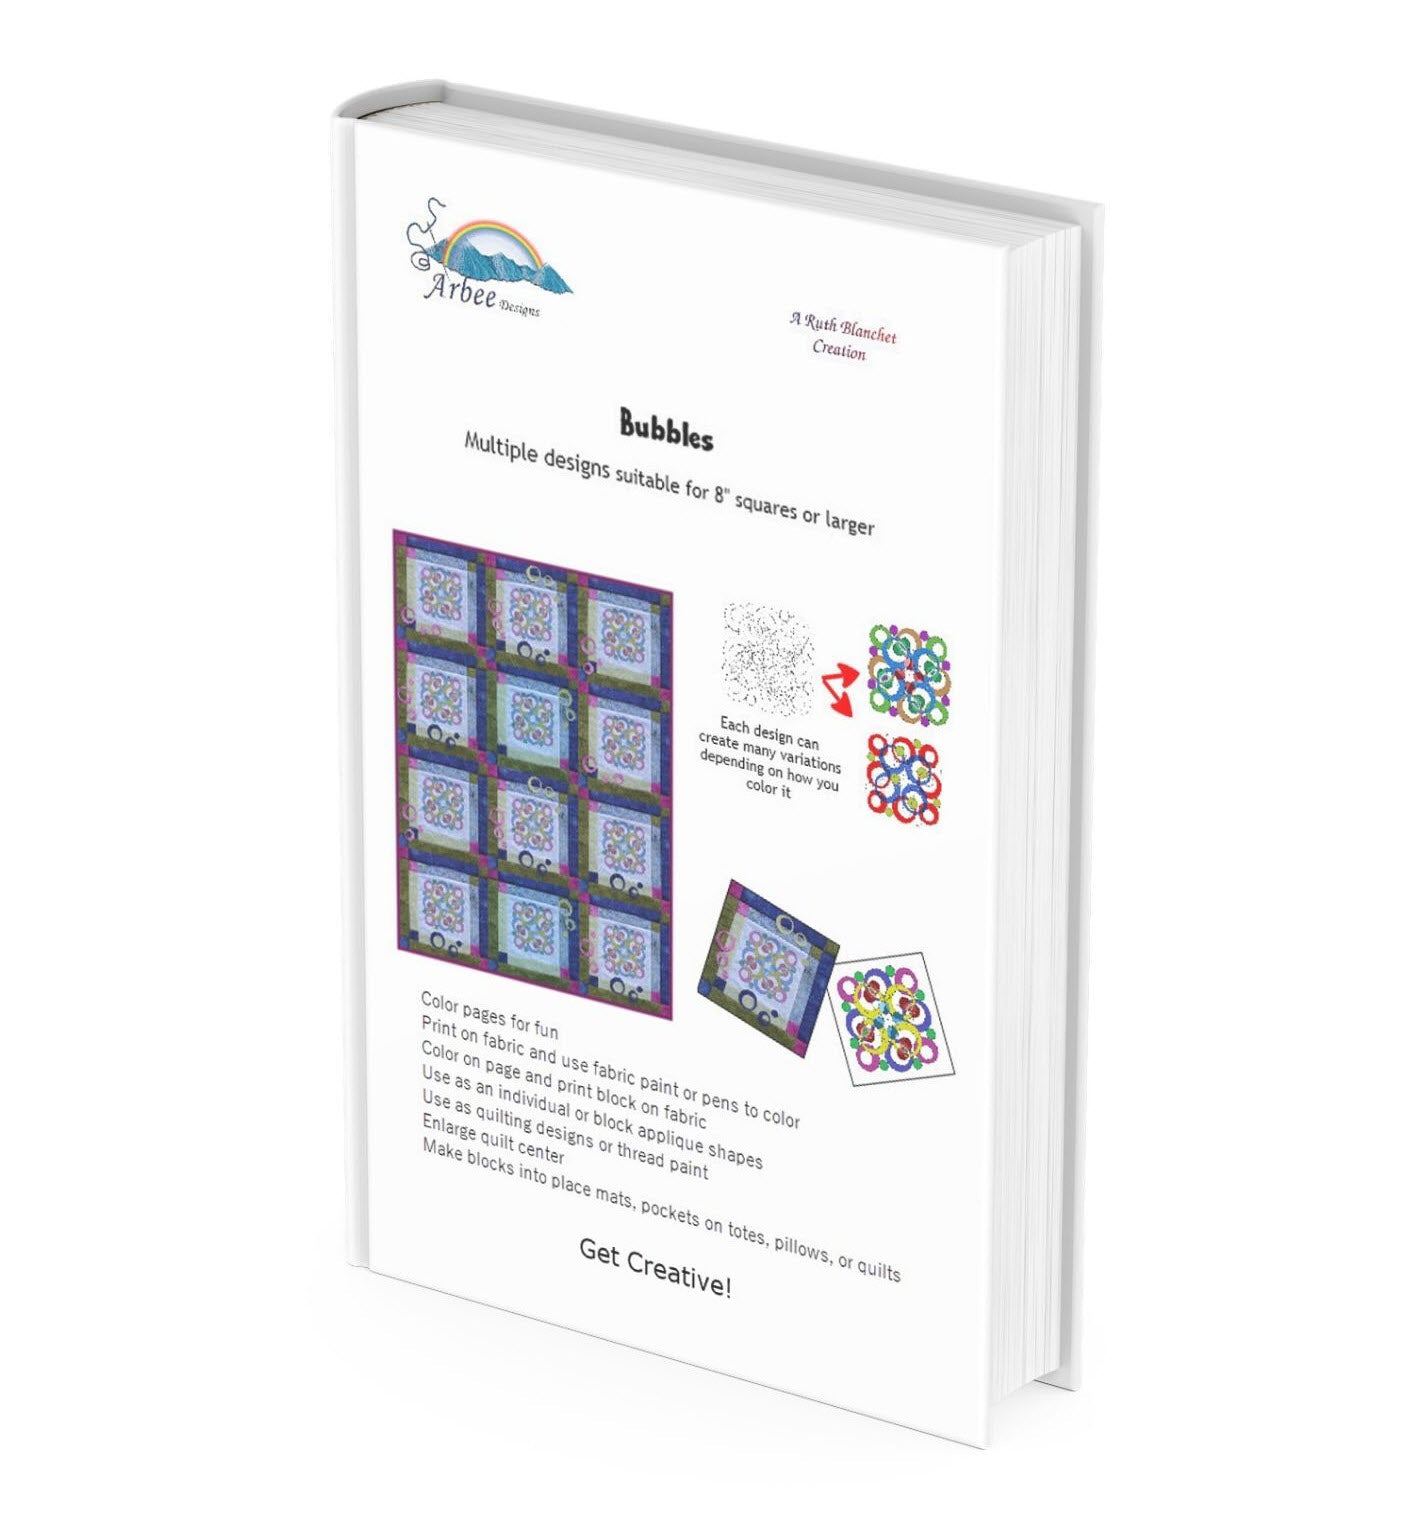 ebook include multiple bubble designs to create unique quilt patterns